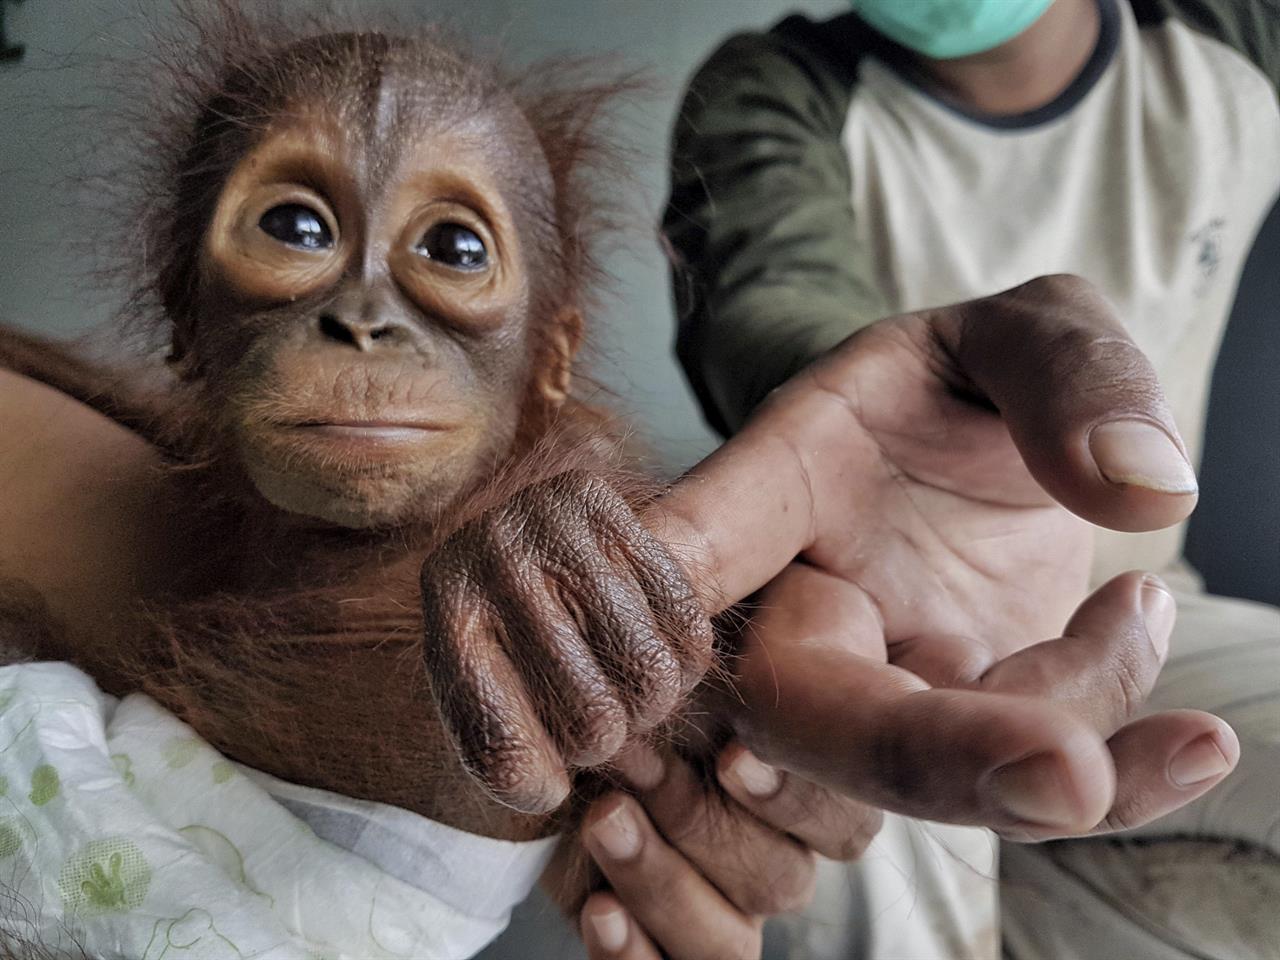 Group: Orangutan orphans a sign of habitat destruction 710 KNUS